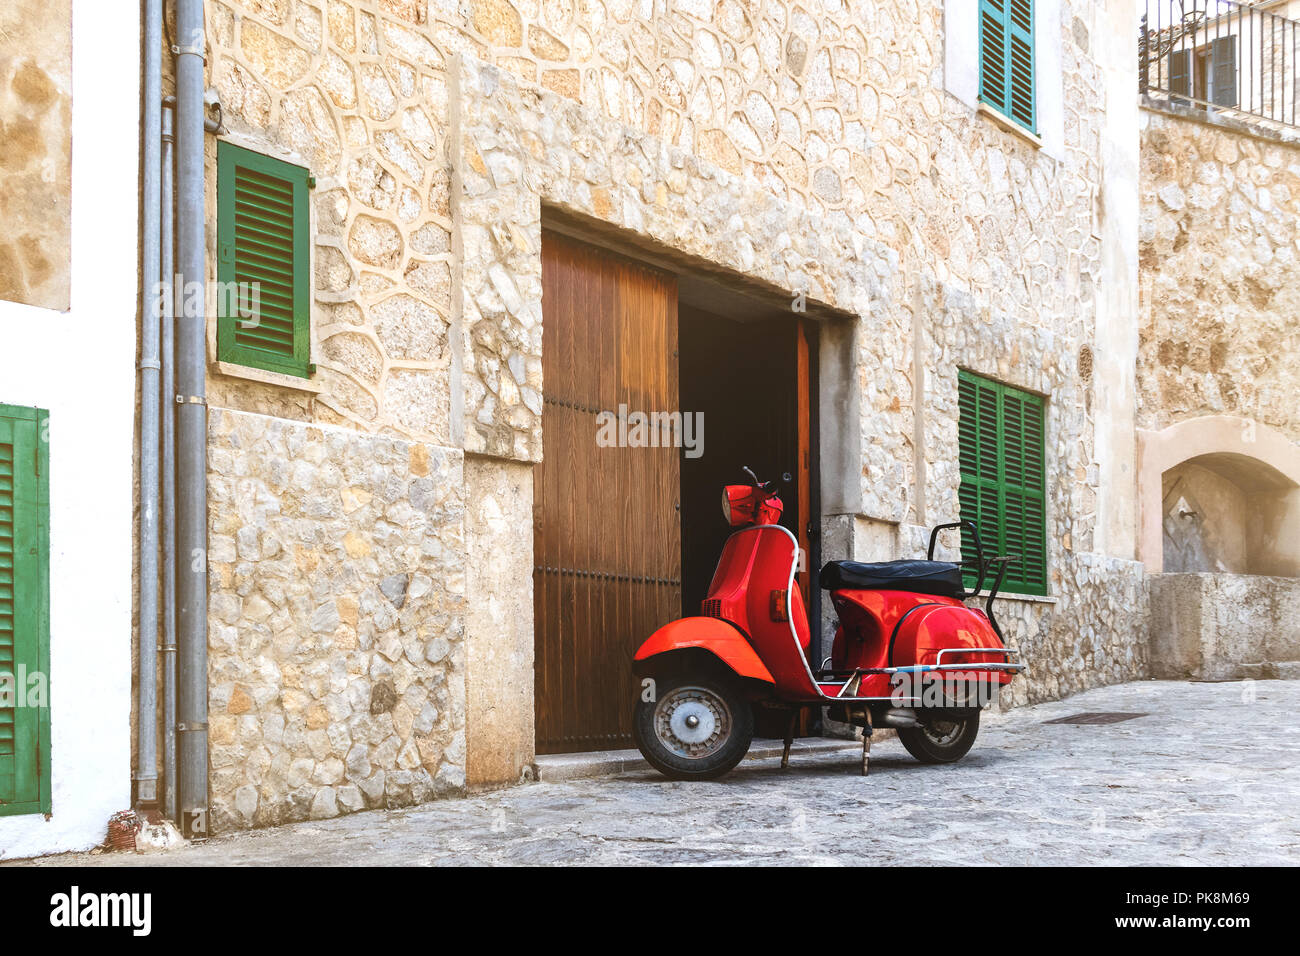 Vintage motocicleta roja estacionada en la histórica aldea española Foto de stock